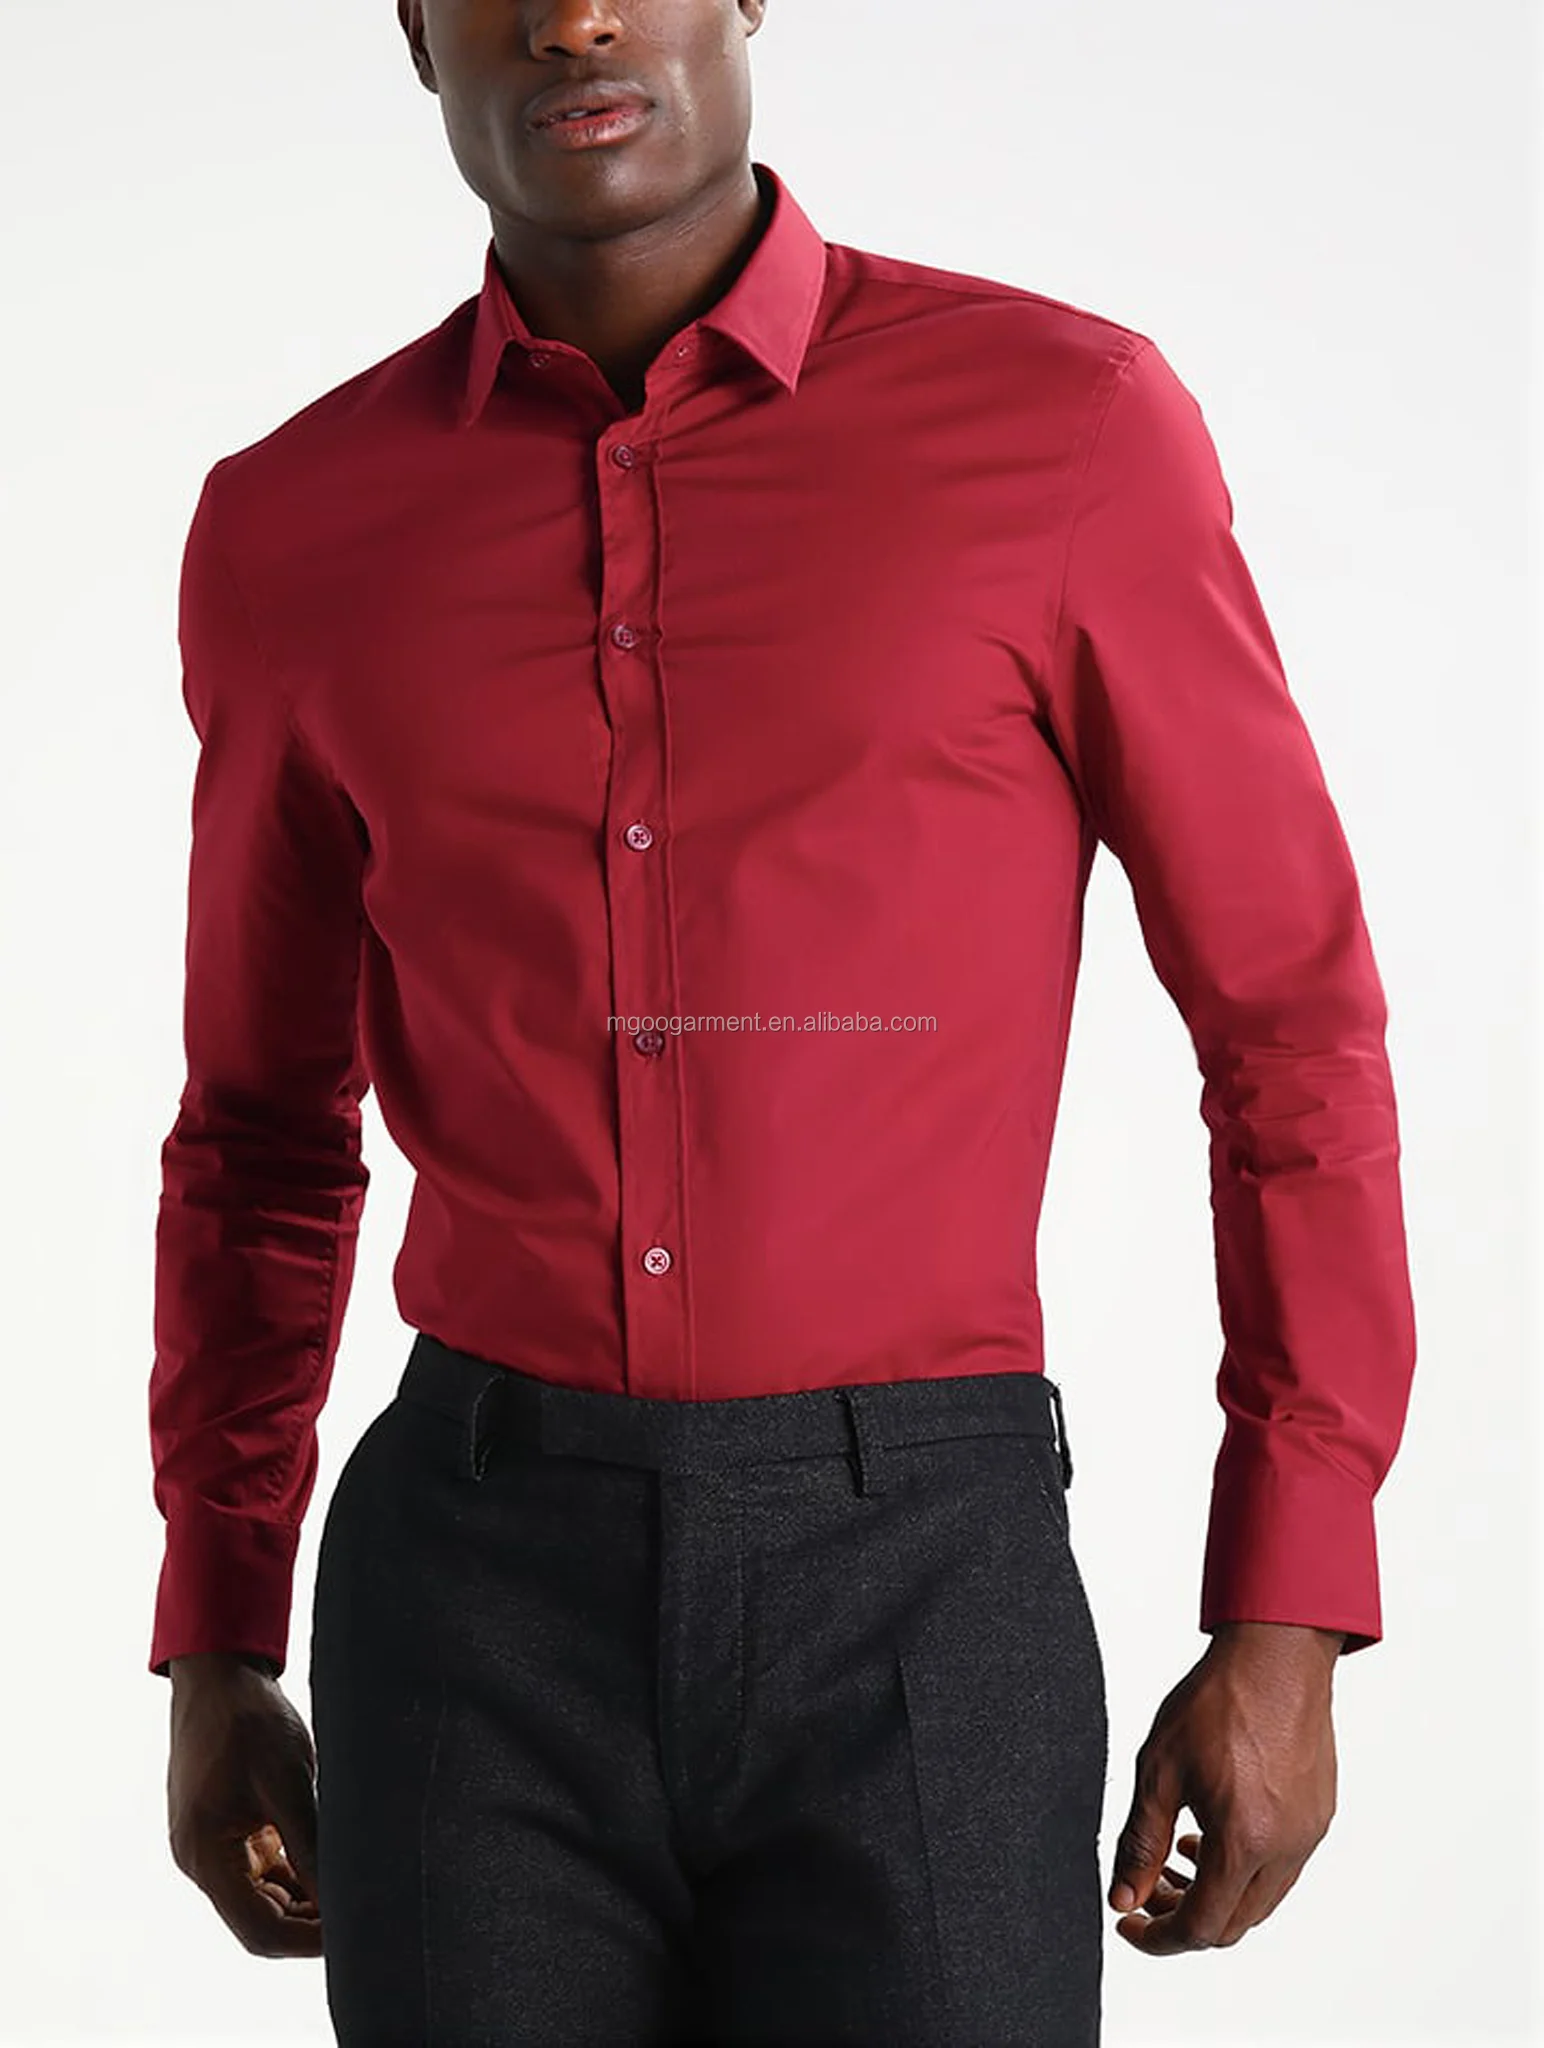 Source Blank wine formal shirt for men 100% cotton latest model slim fit long sleeve shirt lightweight on m.alibaba.com